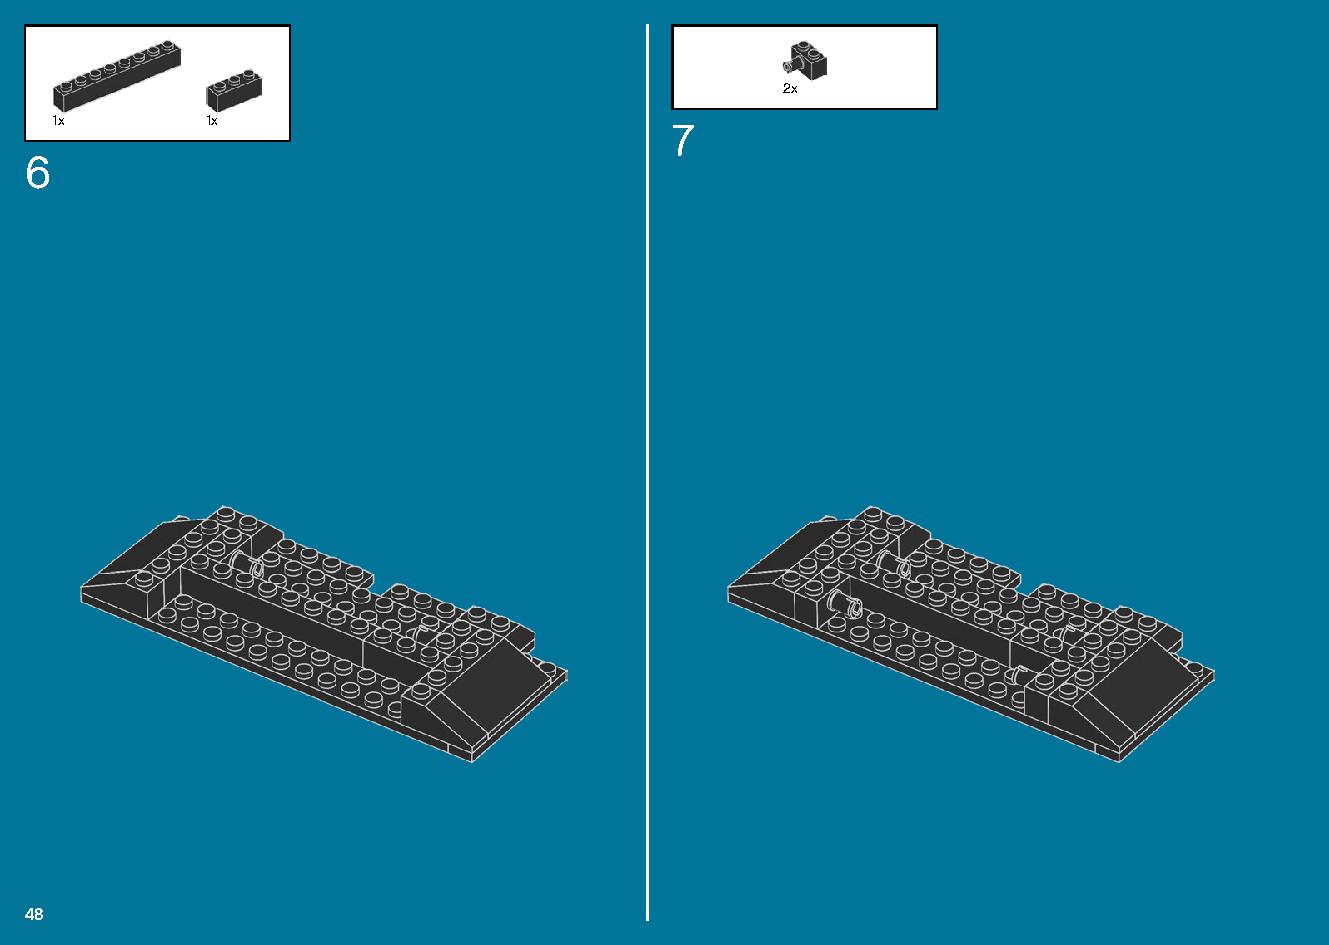 International Space Station 21321 レゴの商品情報 レゴの説明書・組立方法 48 page